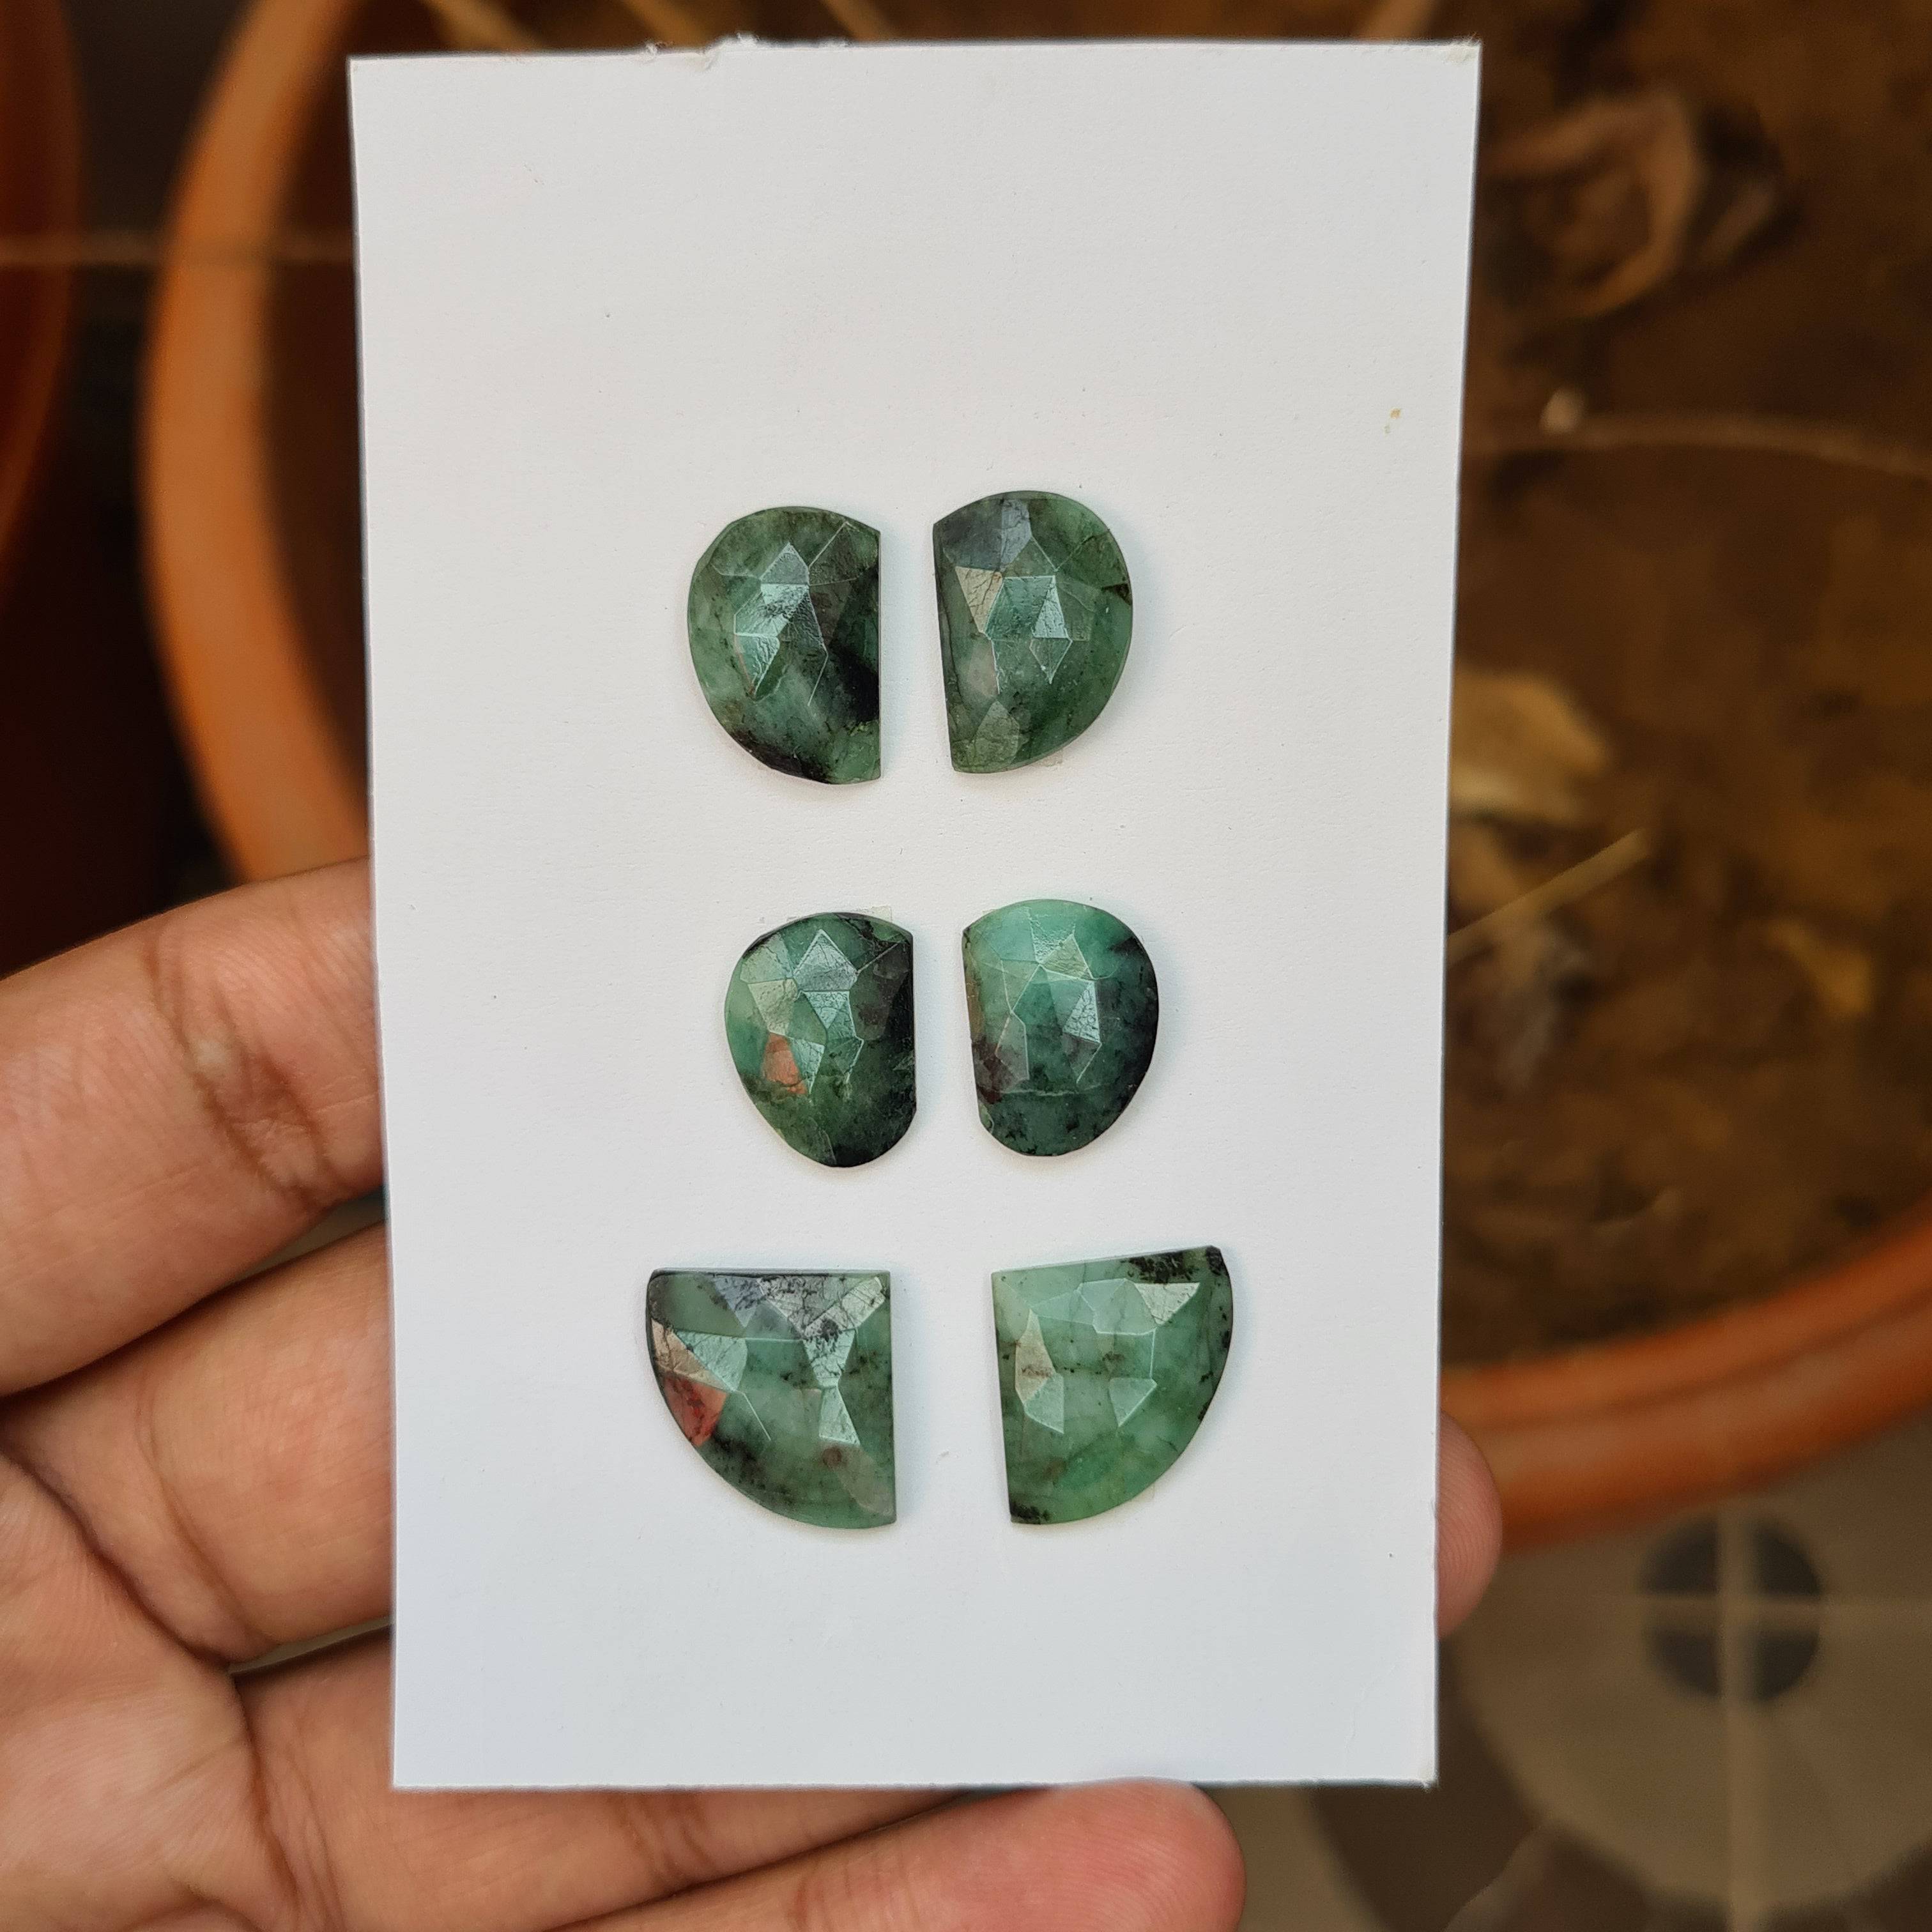 6 pcs Pcs Mozambique Natural Emerald Stone Pairs with Flat backs |Fancy shape14-16mm Size - The LabradoriteKing